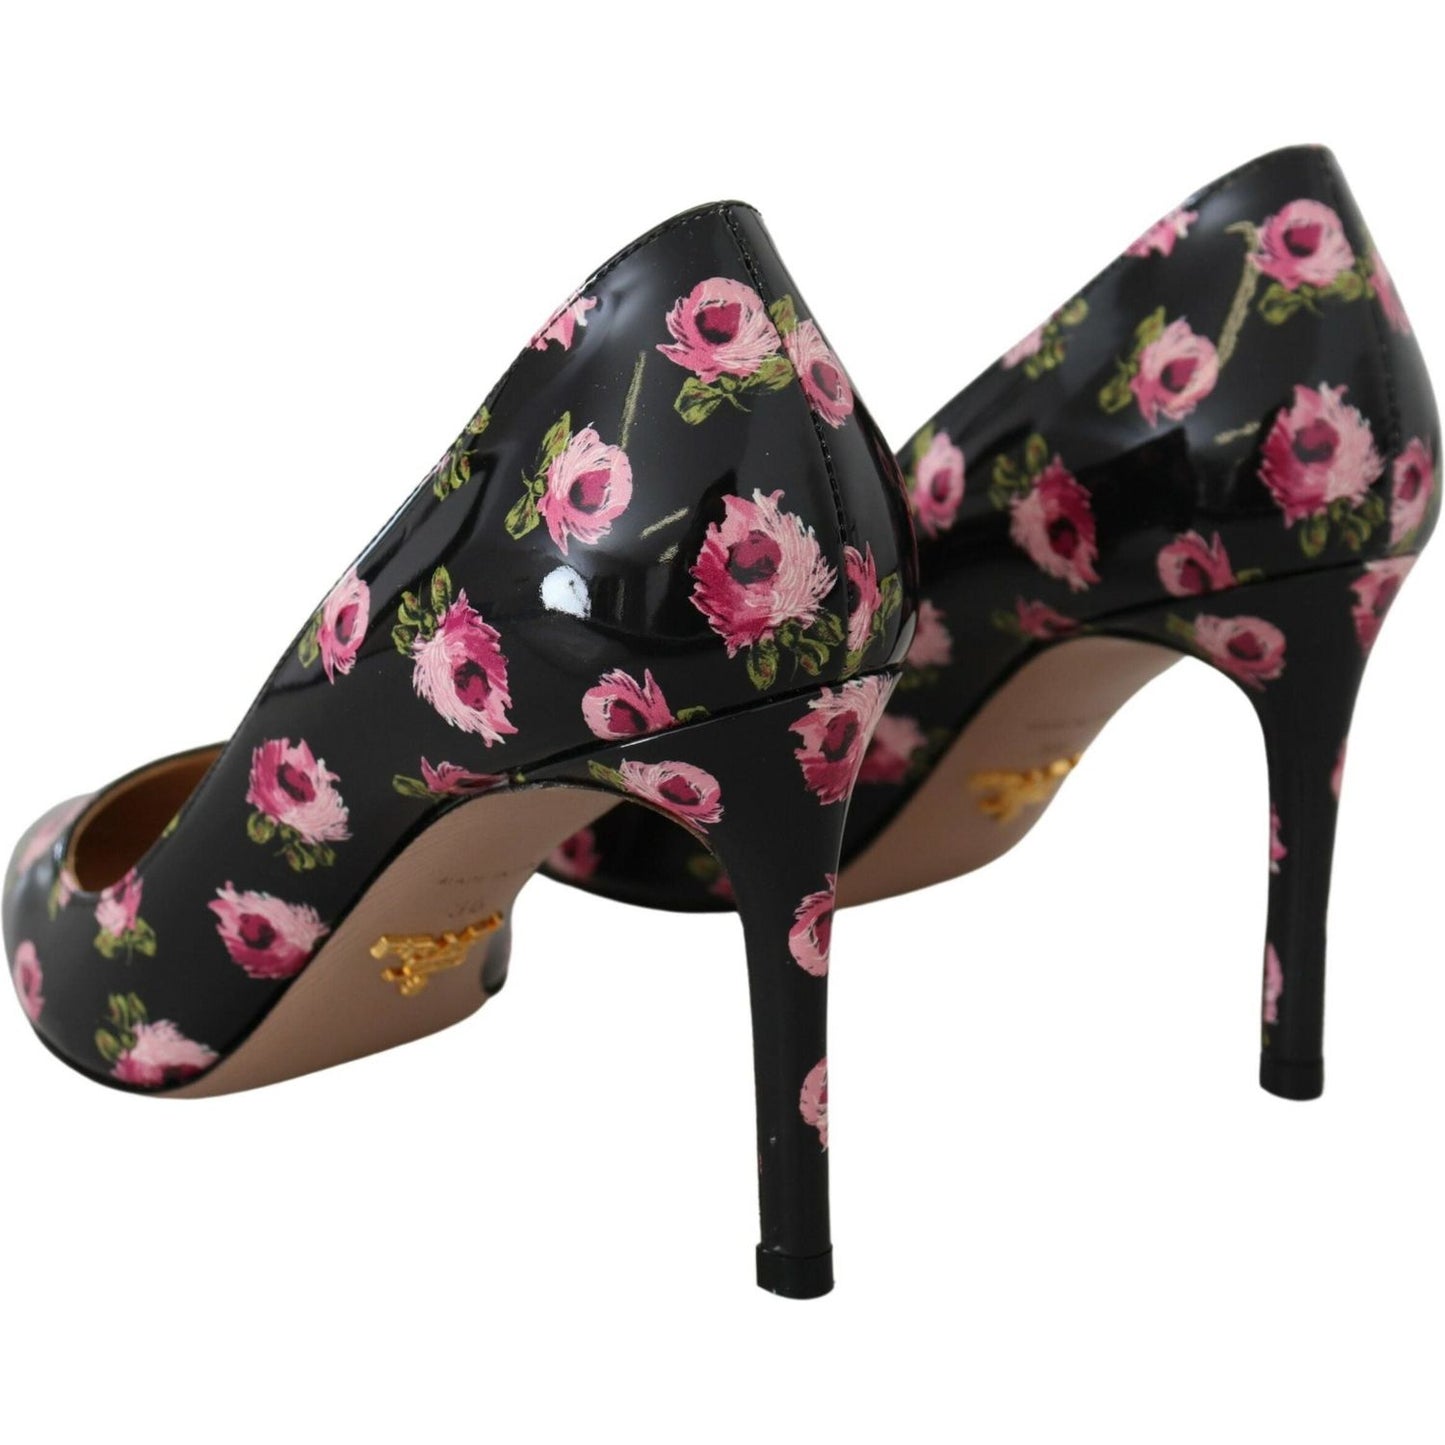 Prada Elegant Floral Print Leather Pumps black-leather-floral-heels-stilettos-pumps IMG_8307-1-scaled-d72efa5b-ffd.jpg